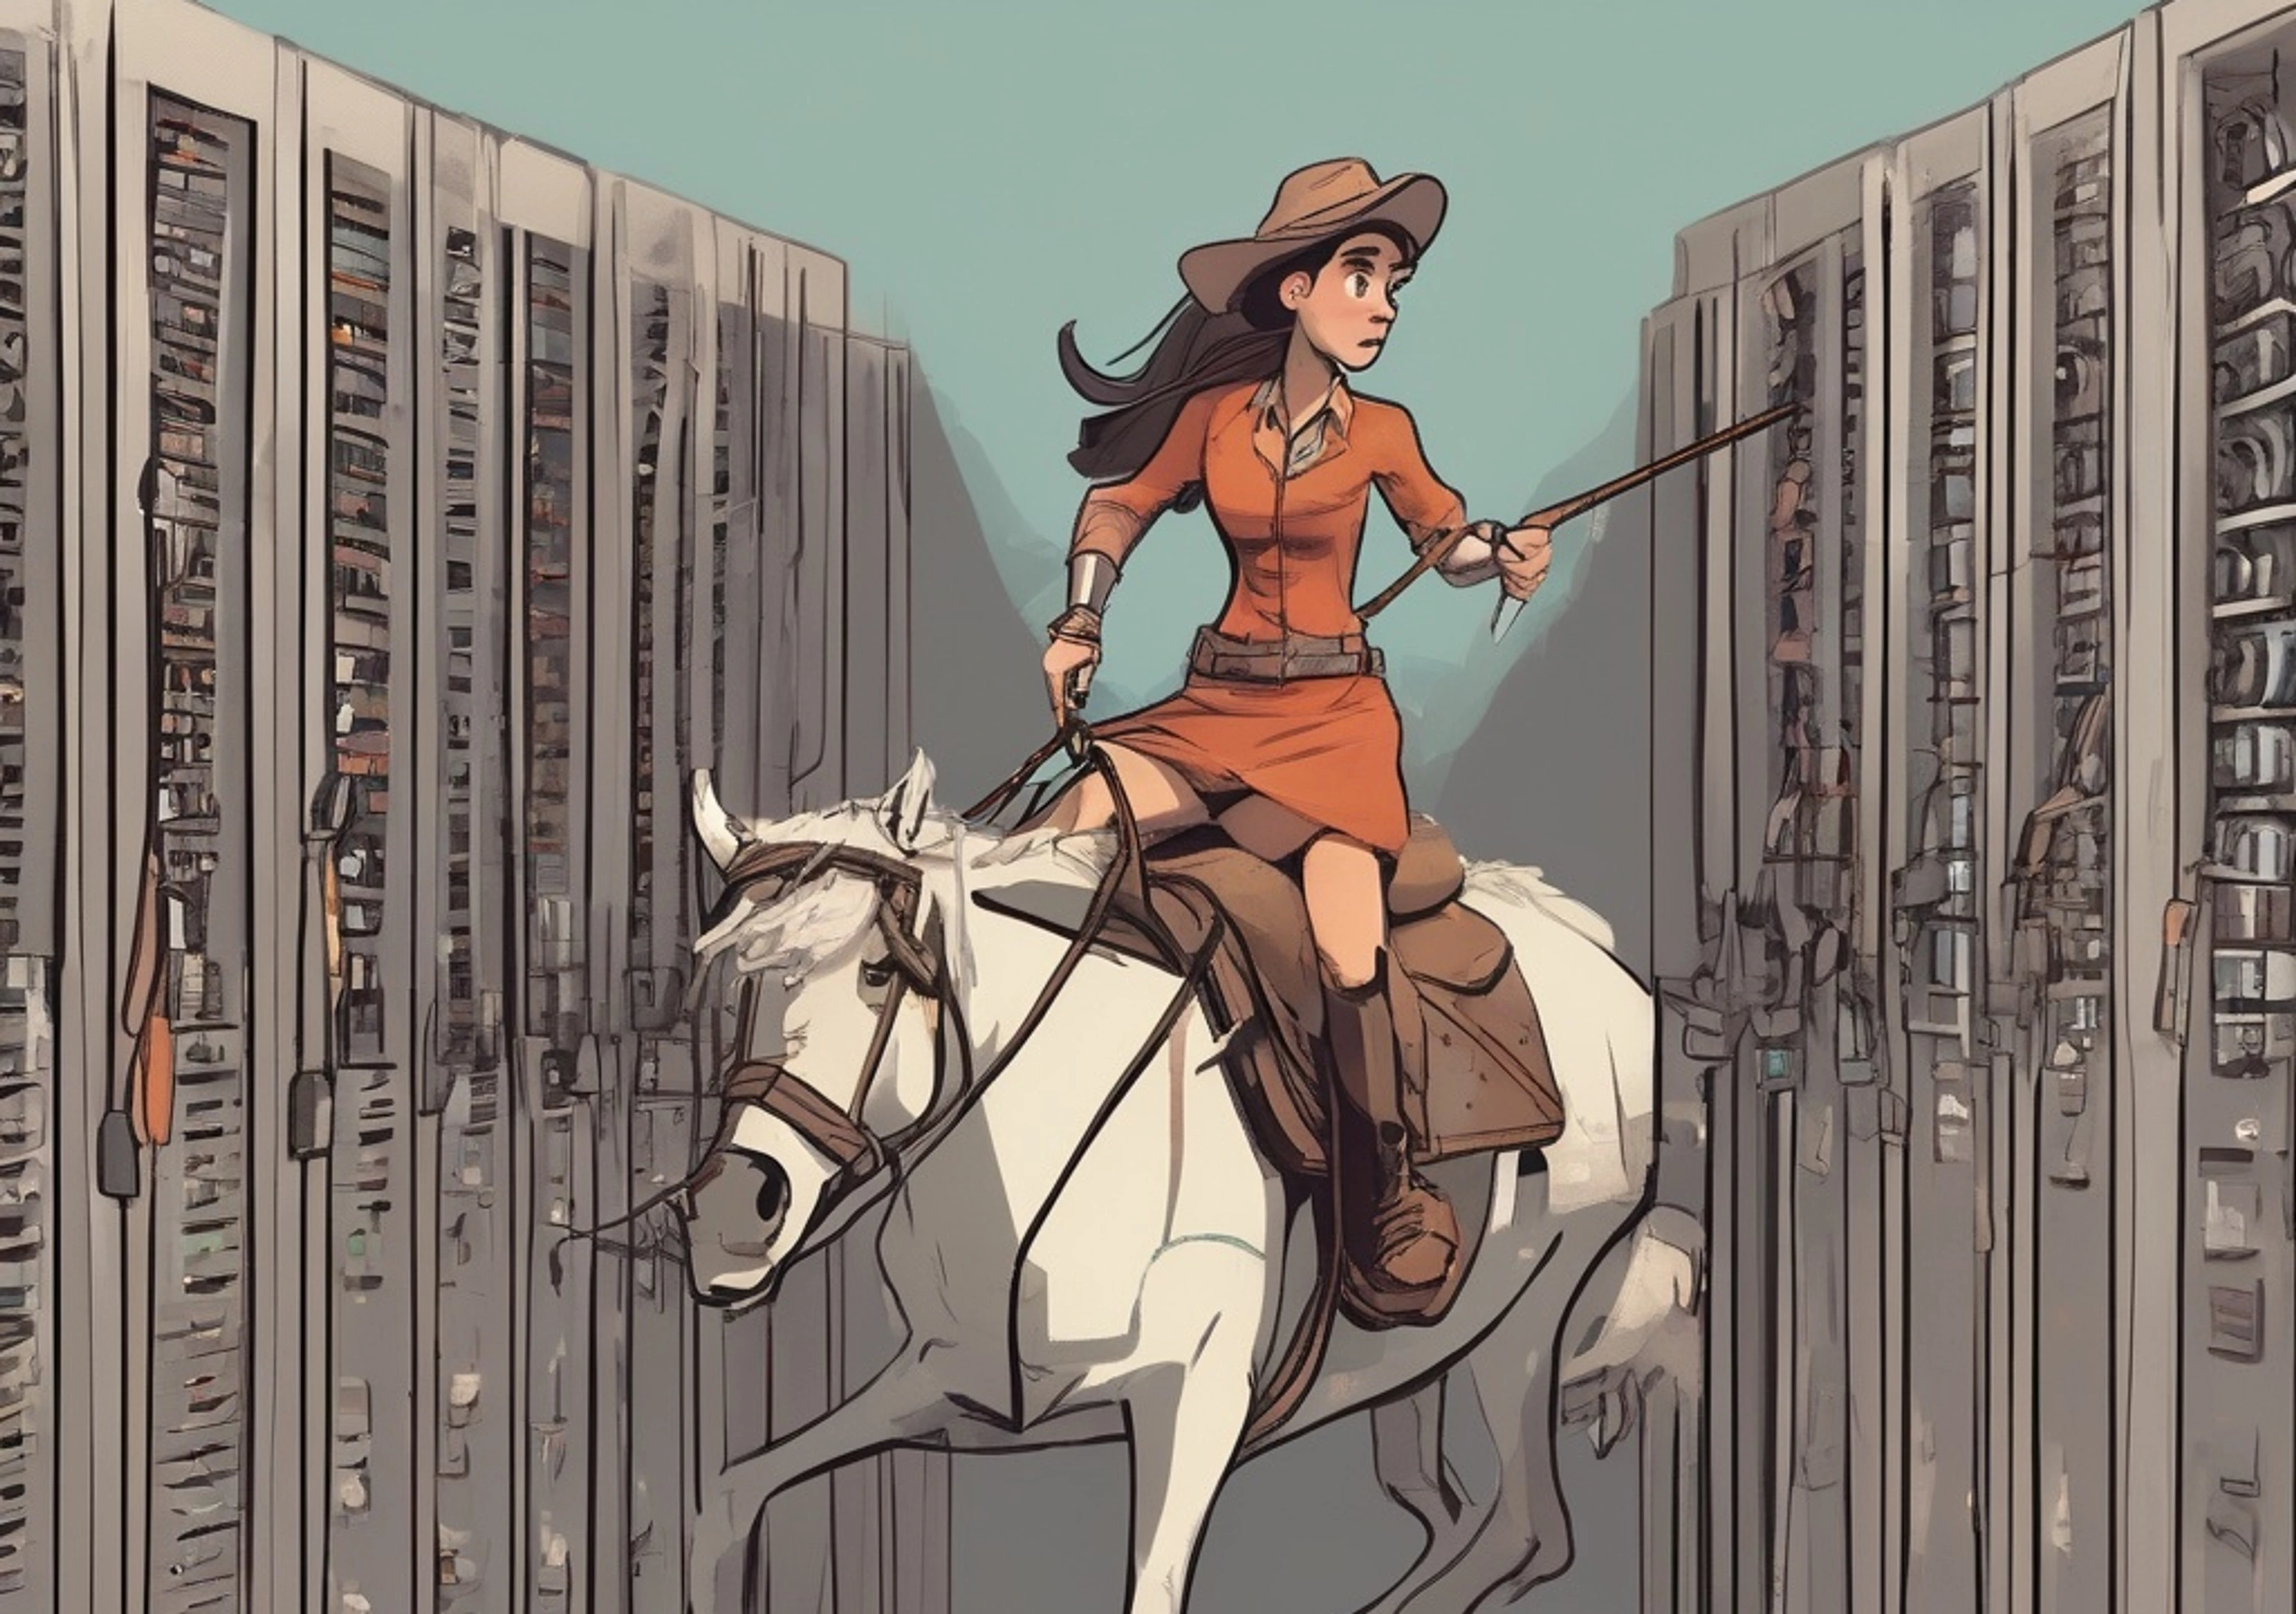 A woman on a horse lassoing a server rack